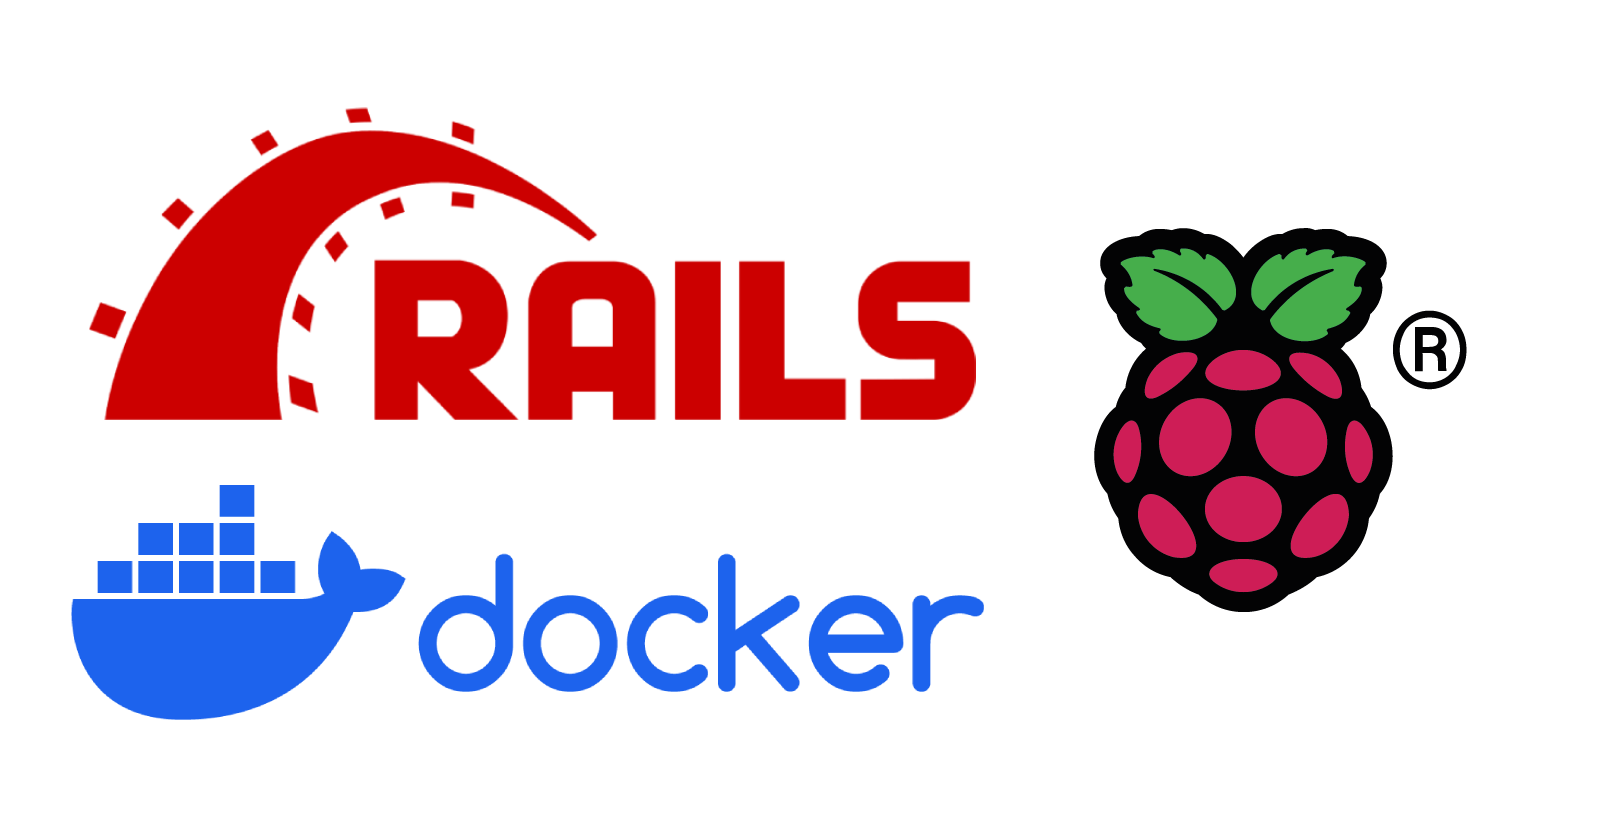 Deploying a rails app with docker on a raspberry pi